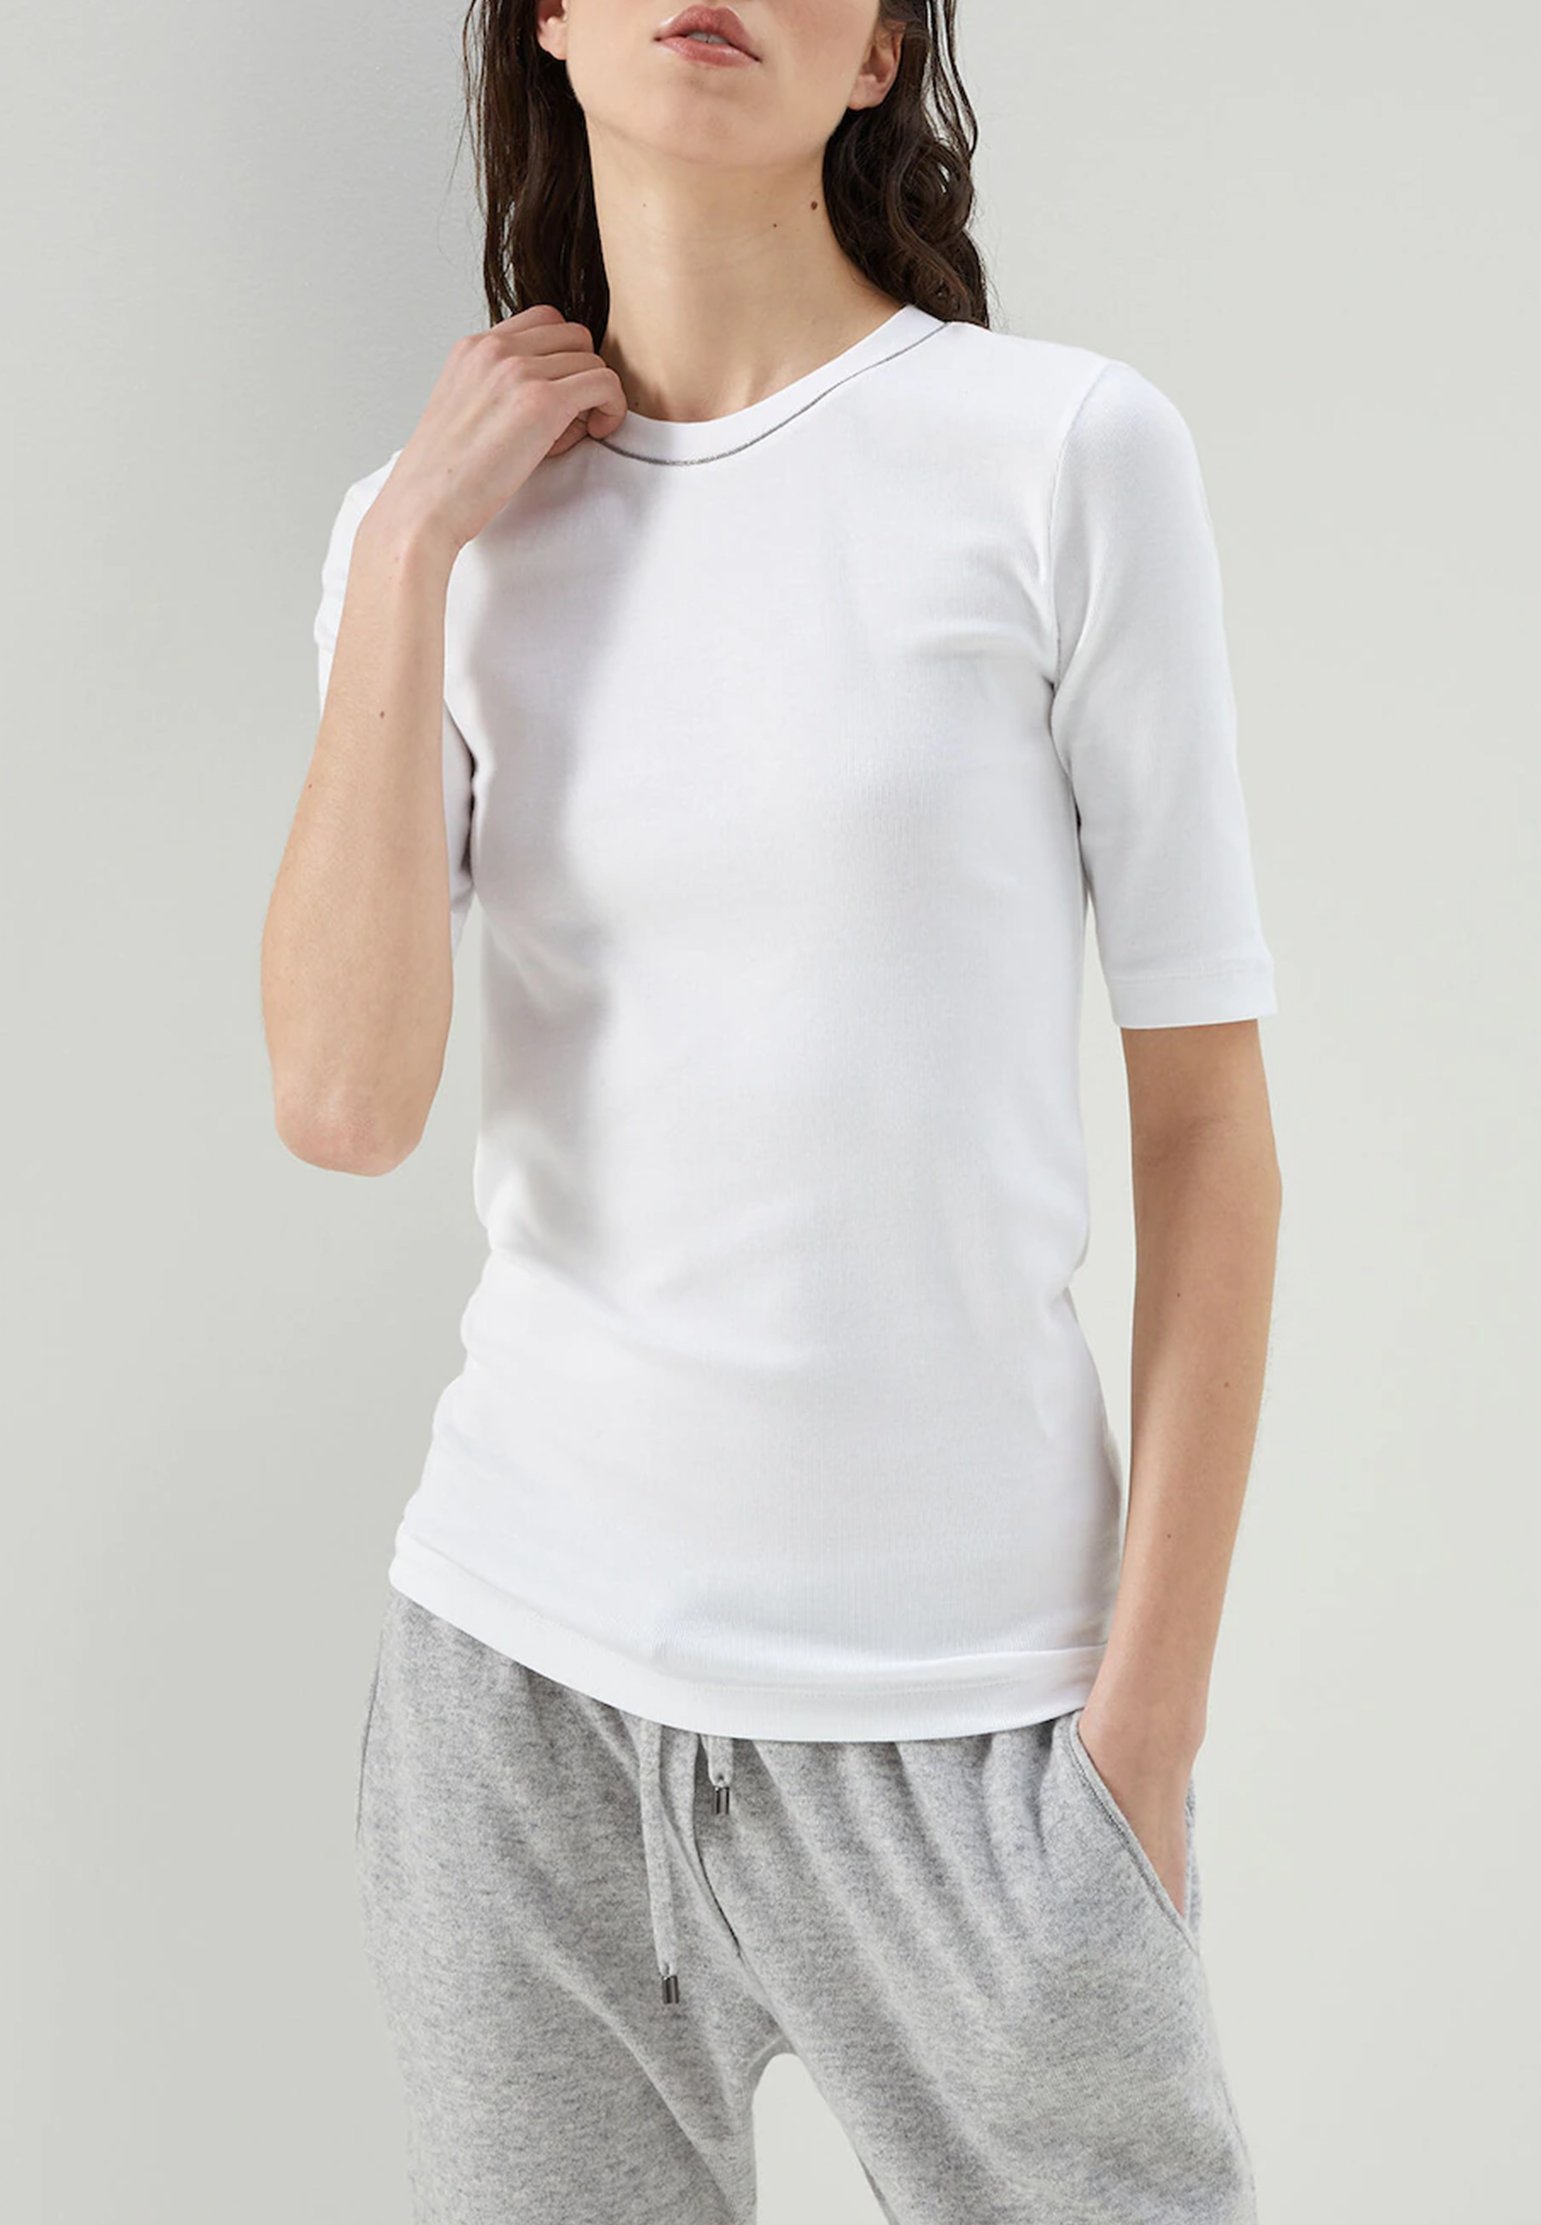 T-Shirt BRUNELLO CUCINELLI Color: white (Code: 632) in online store Allure